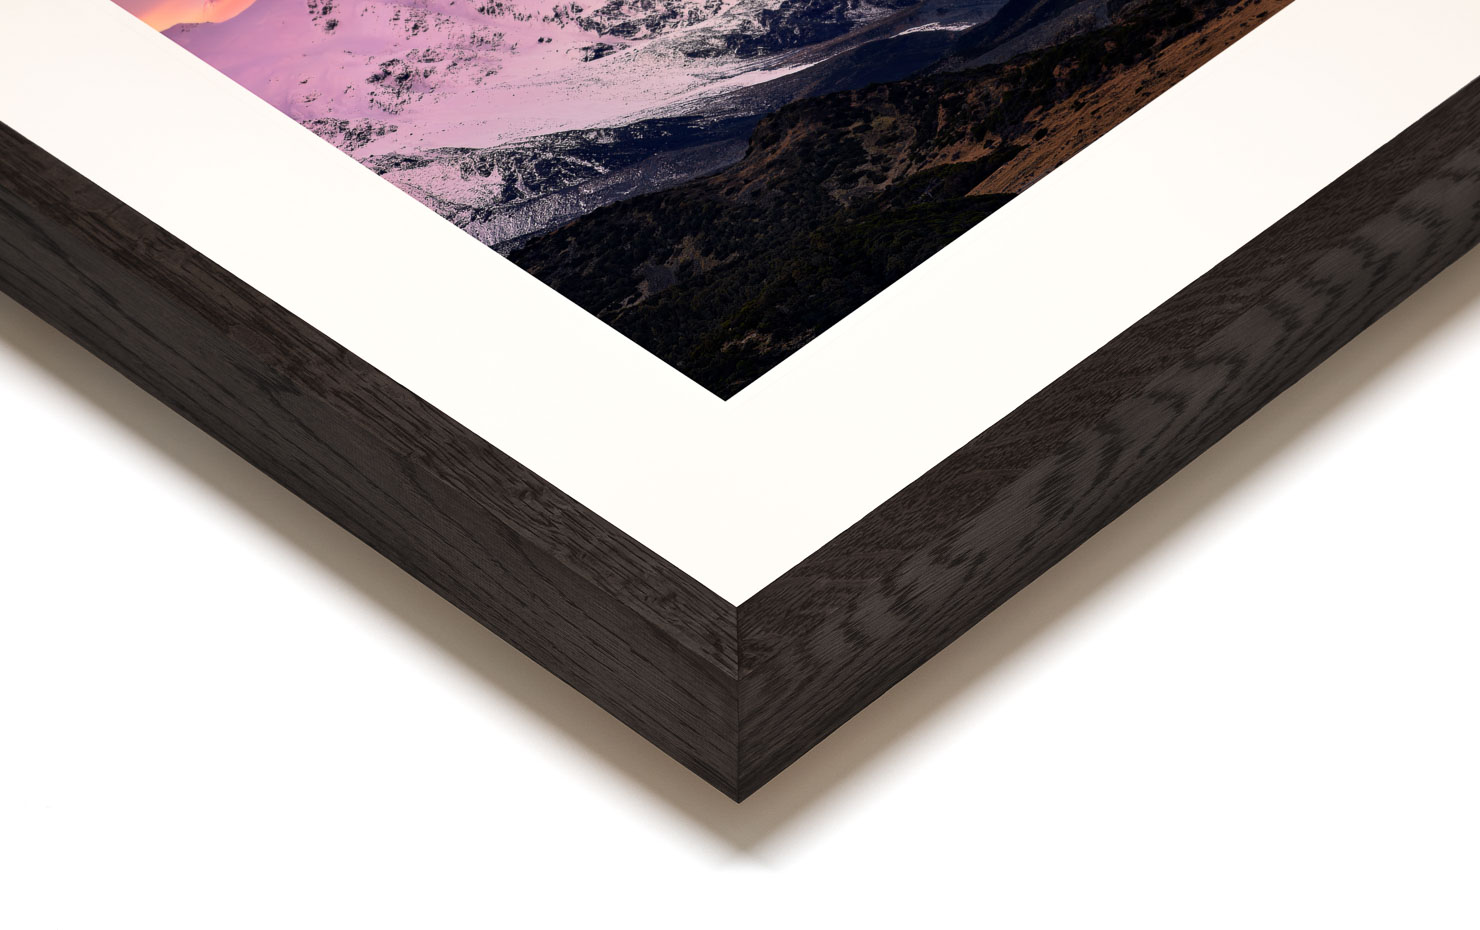 whisper Aoraki Mount Cook New Zealand buy limited edition photograph landscape Full Dark Solid Wood Frame Paul Reiffer